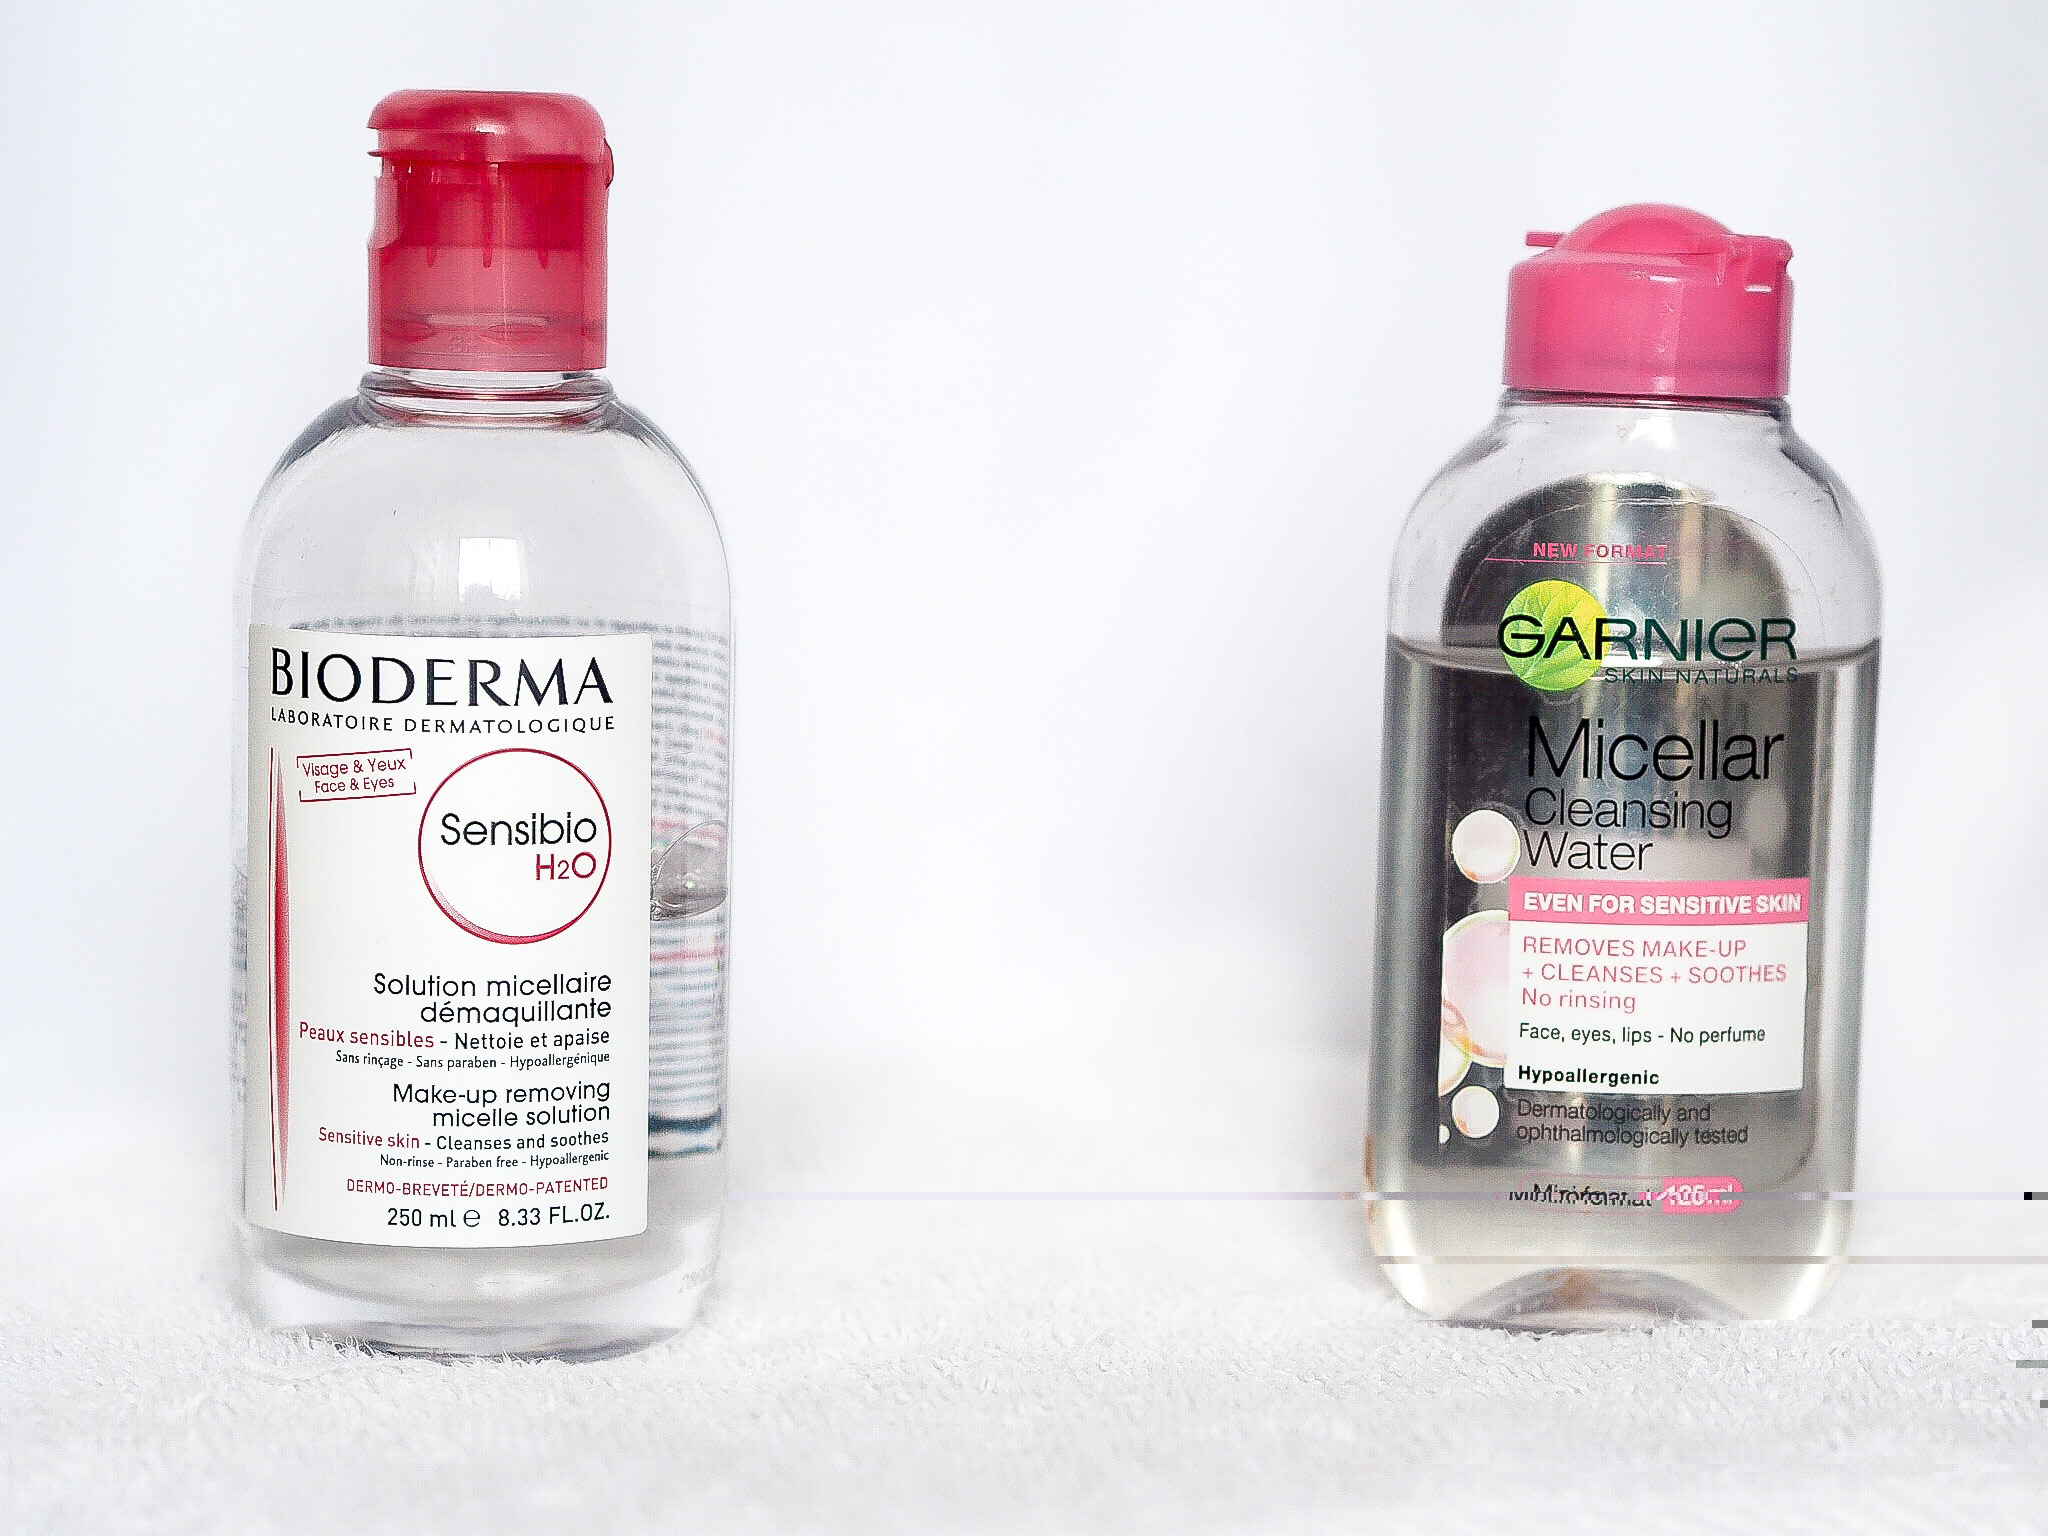 Bioderma sensibio H2O micellar solution review And comparison of Bioderma and Garnier.